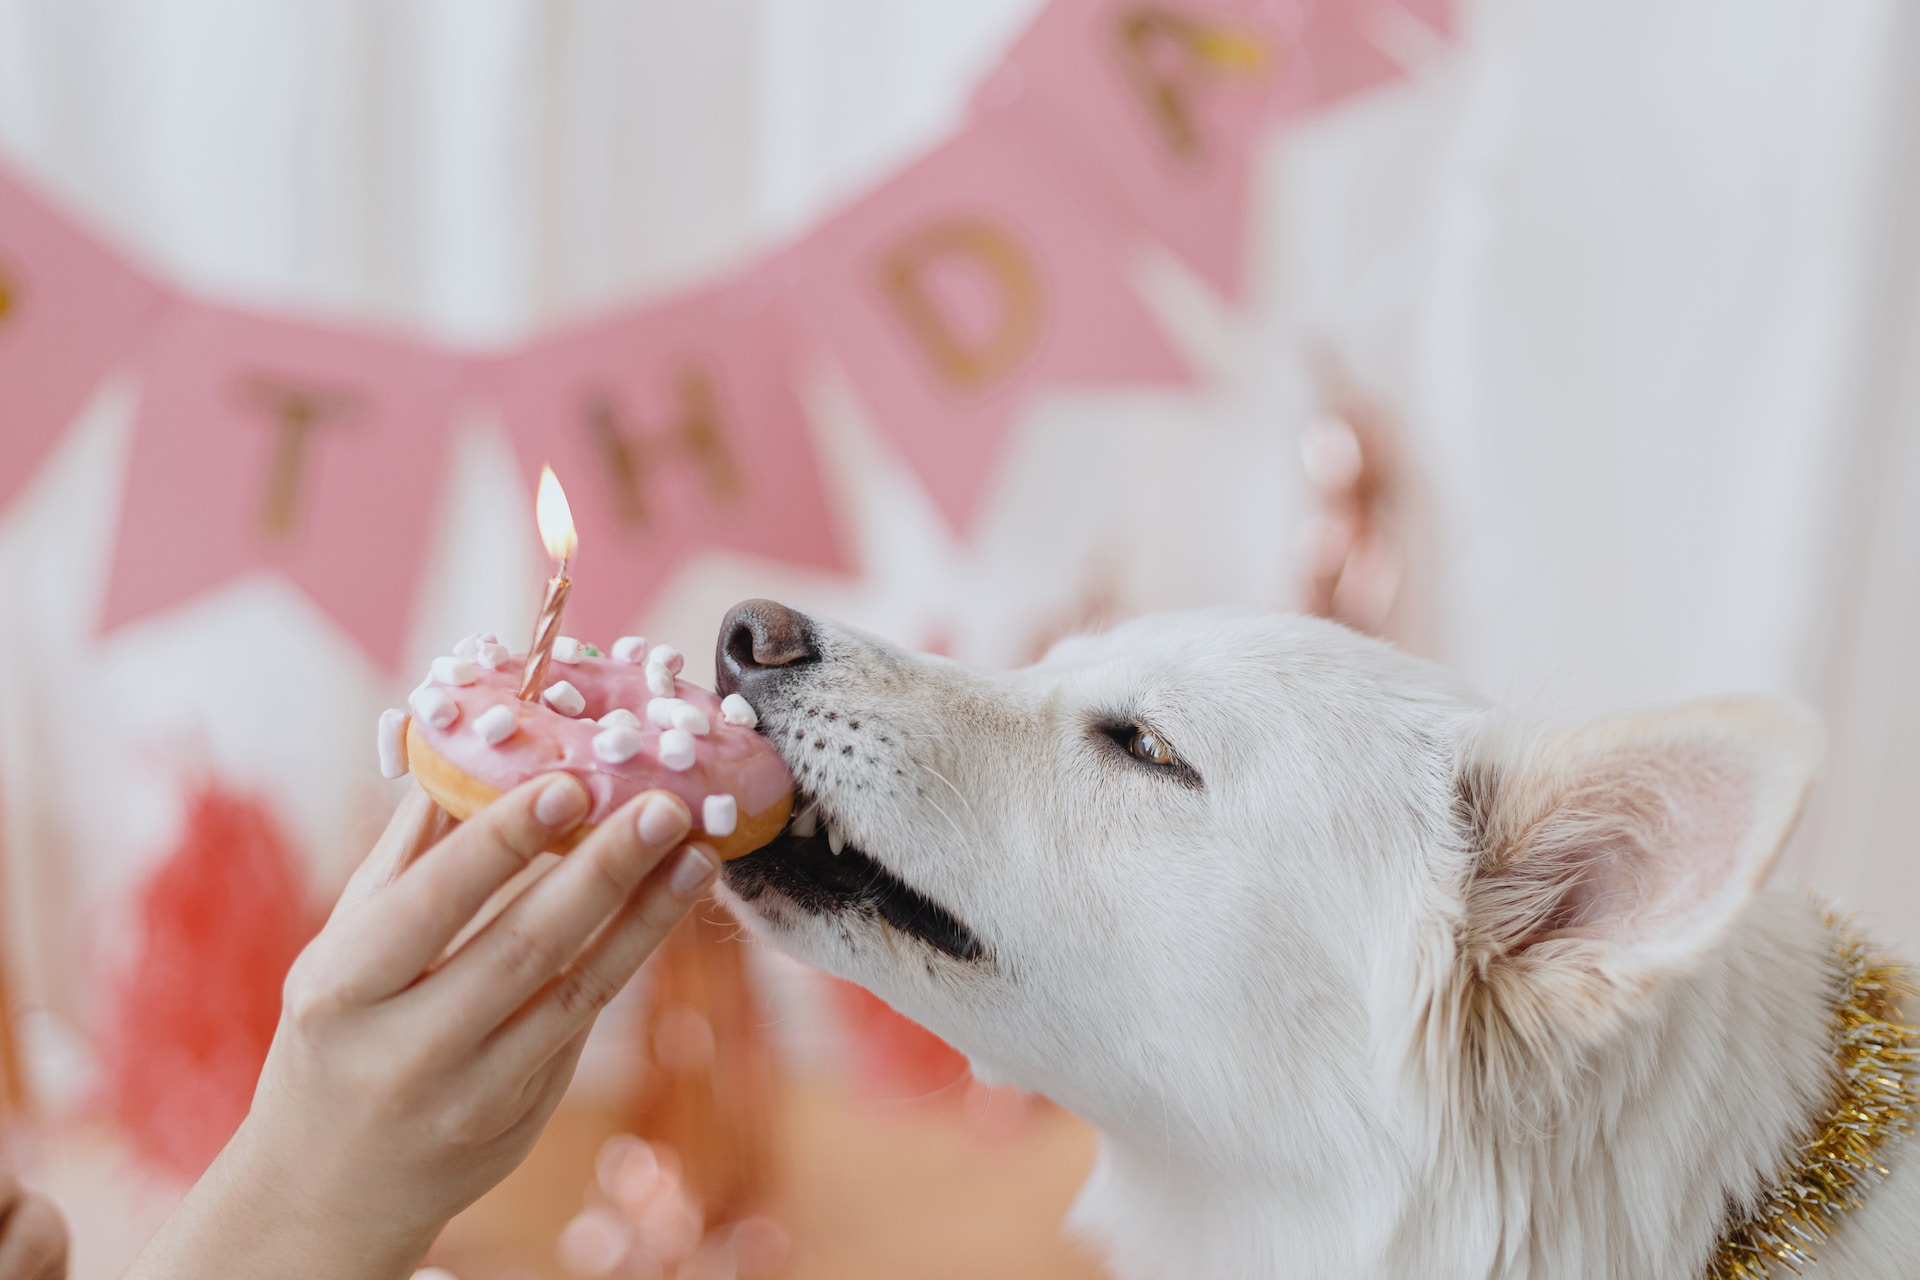 A dog biting into a doughnut at a birthday party